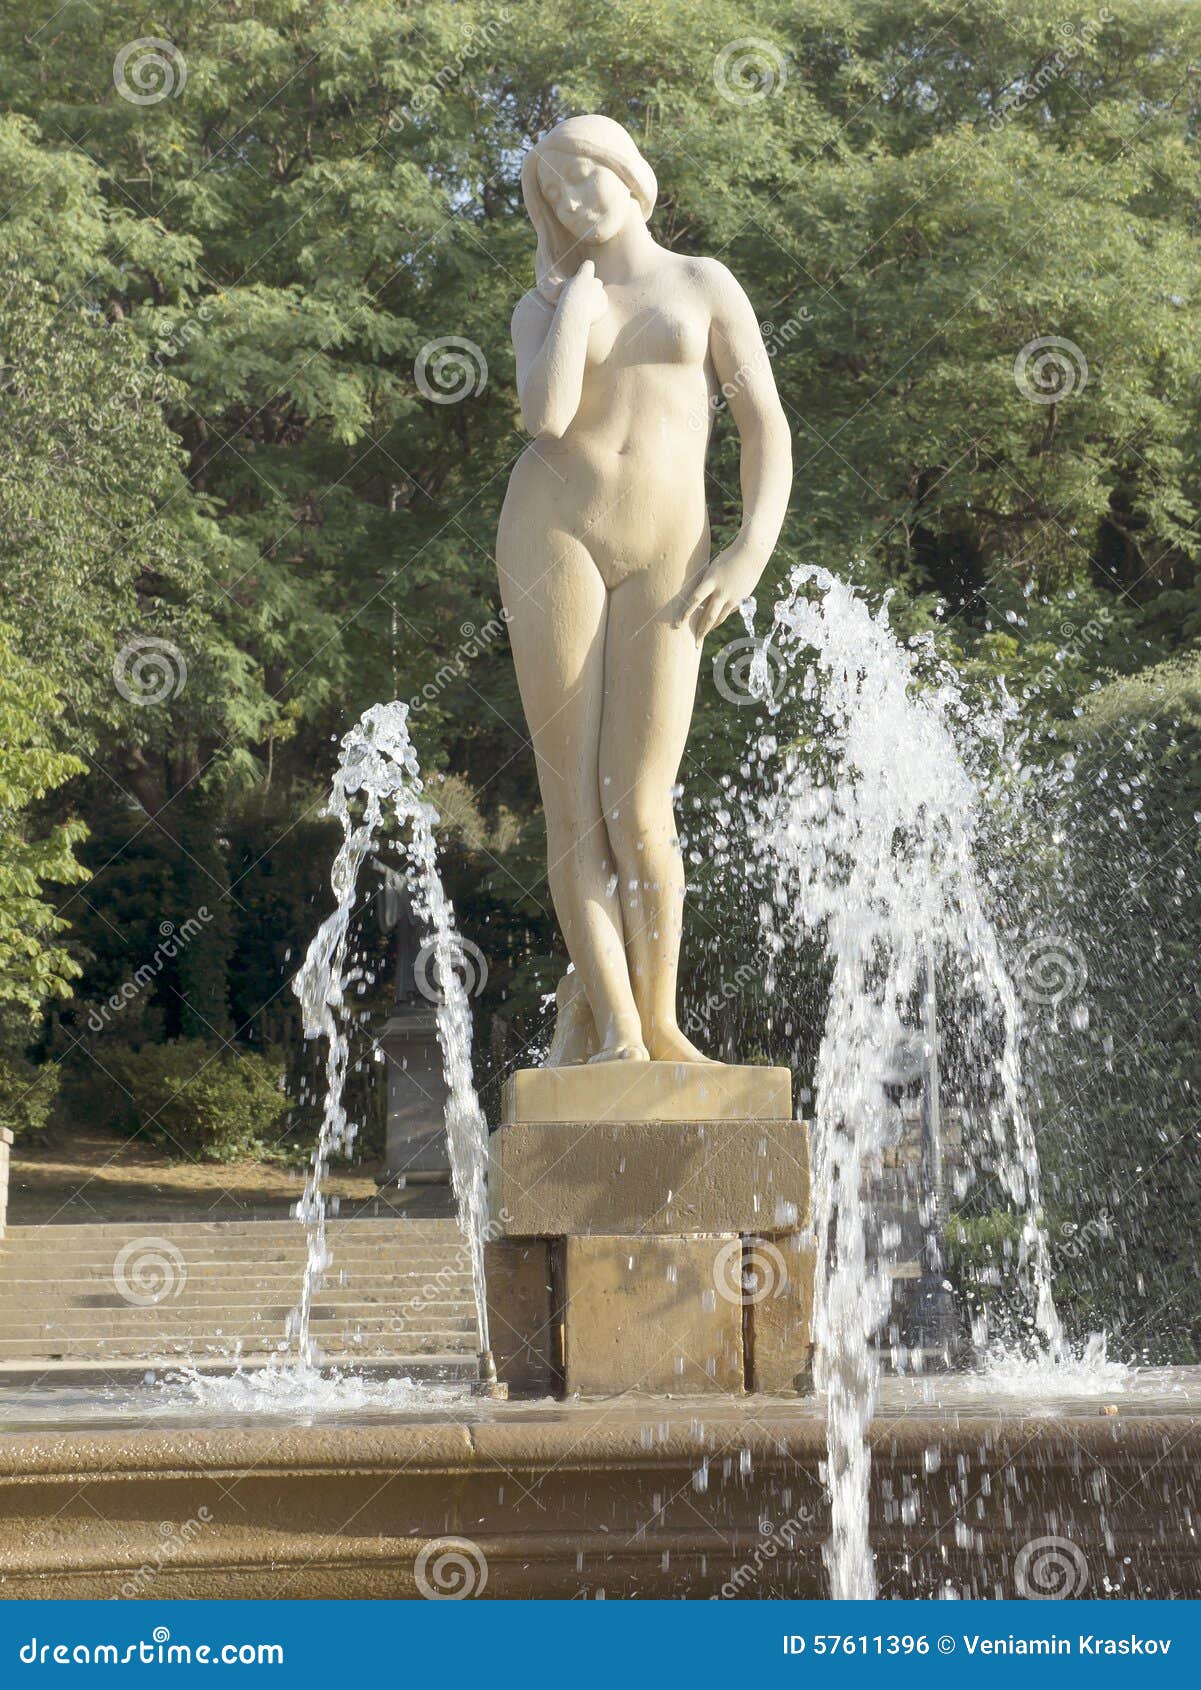 Nude European Statues